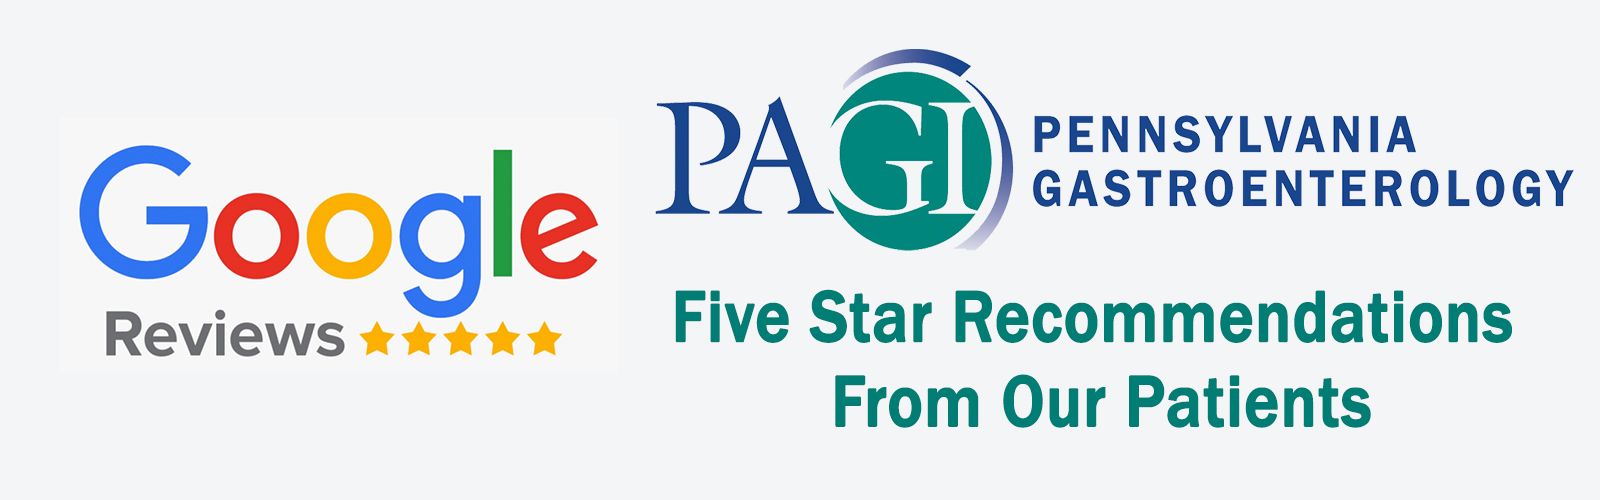 PA-GI-Web-Gallery-5Star-Reviews-1600x500.jpg